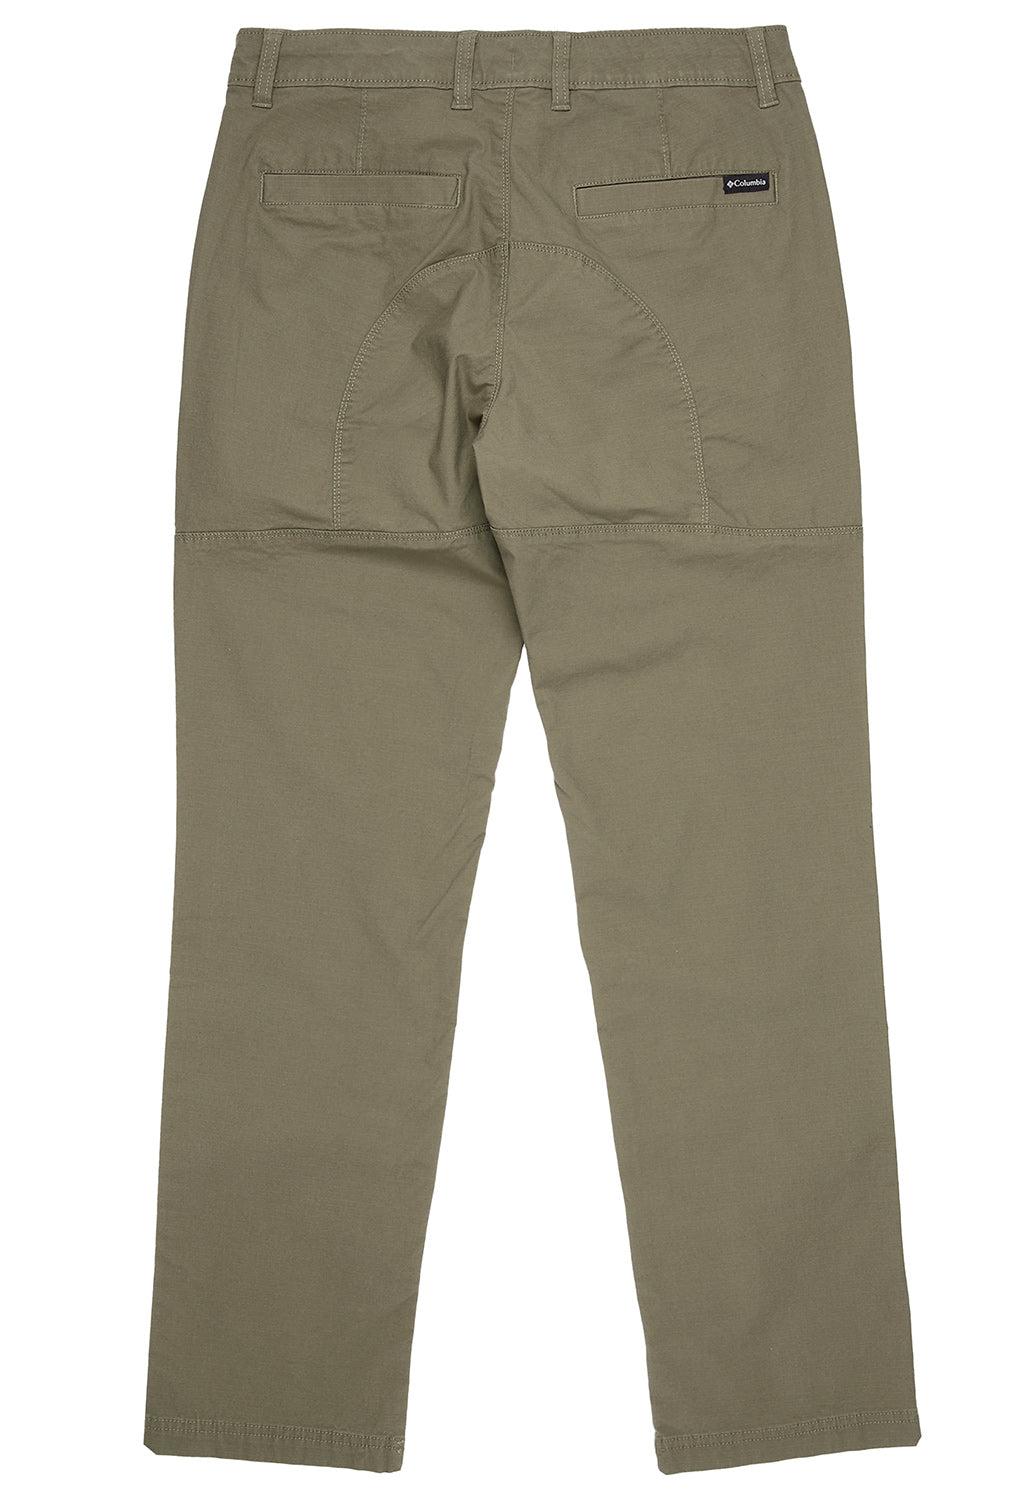 Columbia Men's Wallowa Cargo Pants - Stone Green